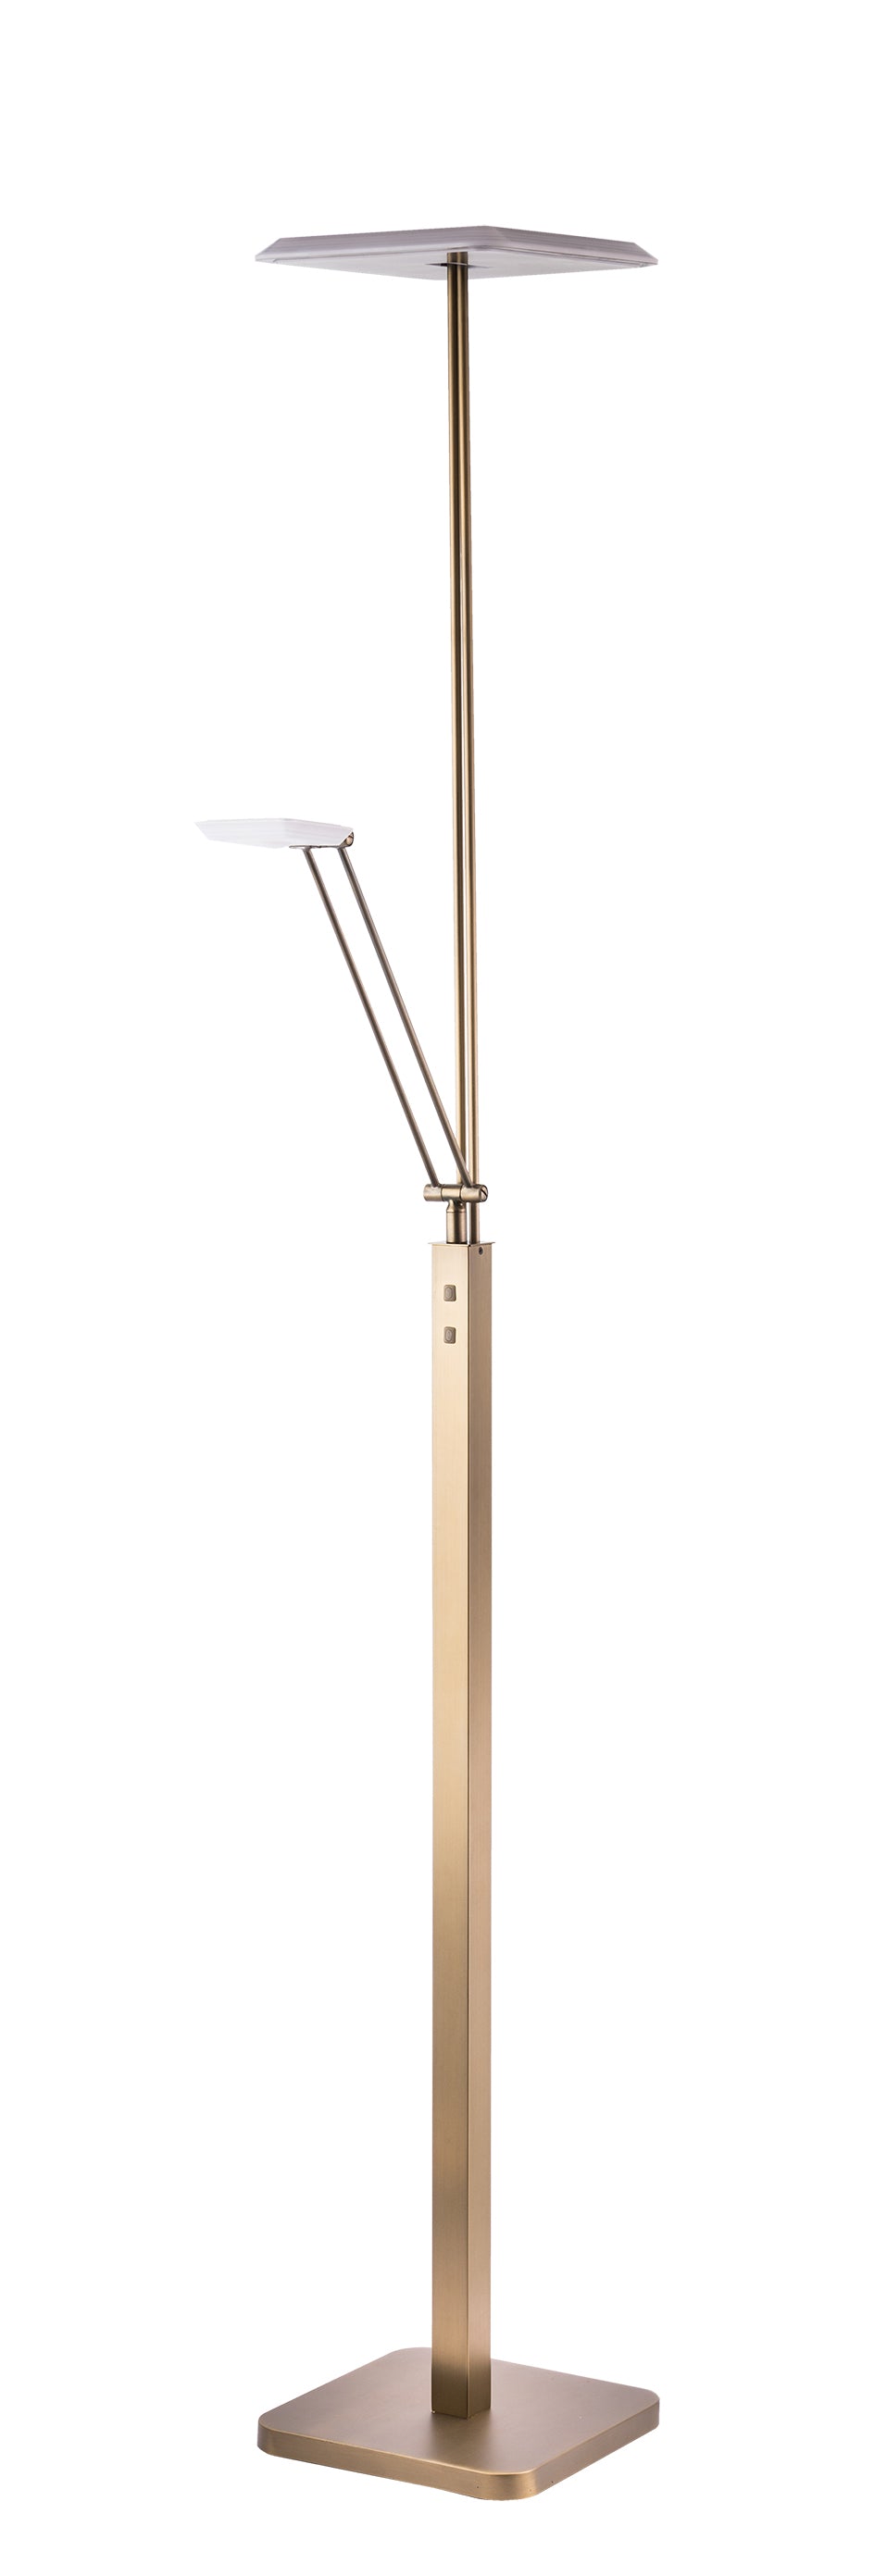 Floor lamp Gold - TC5020-DB | Kendal